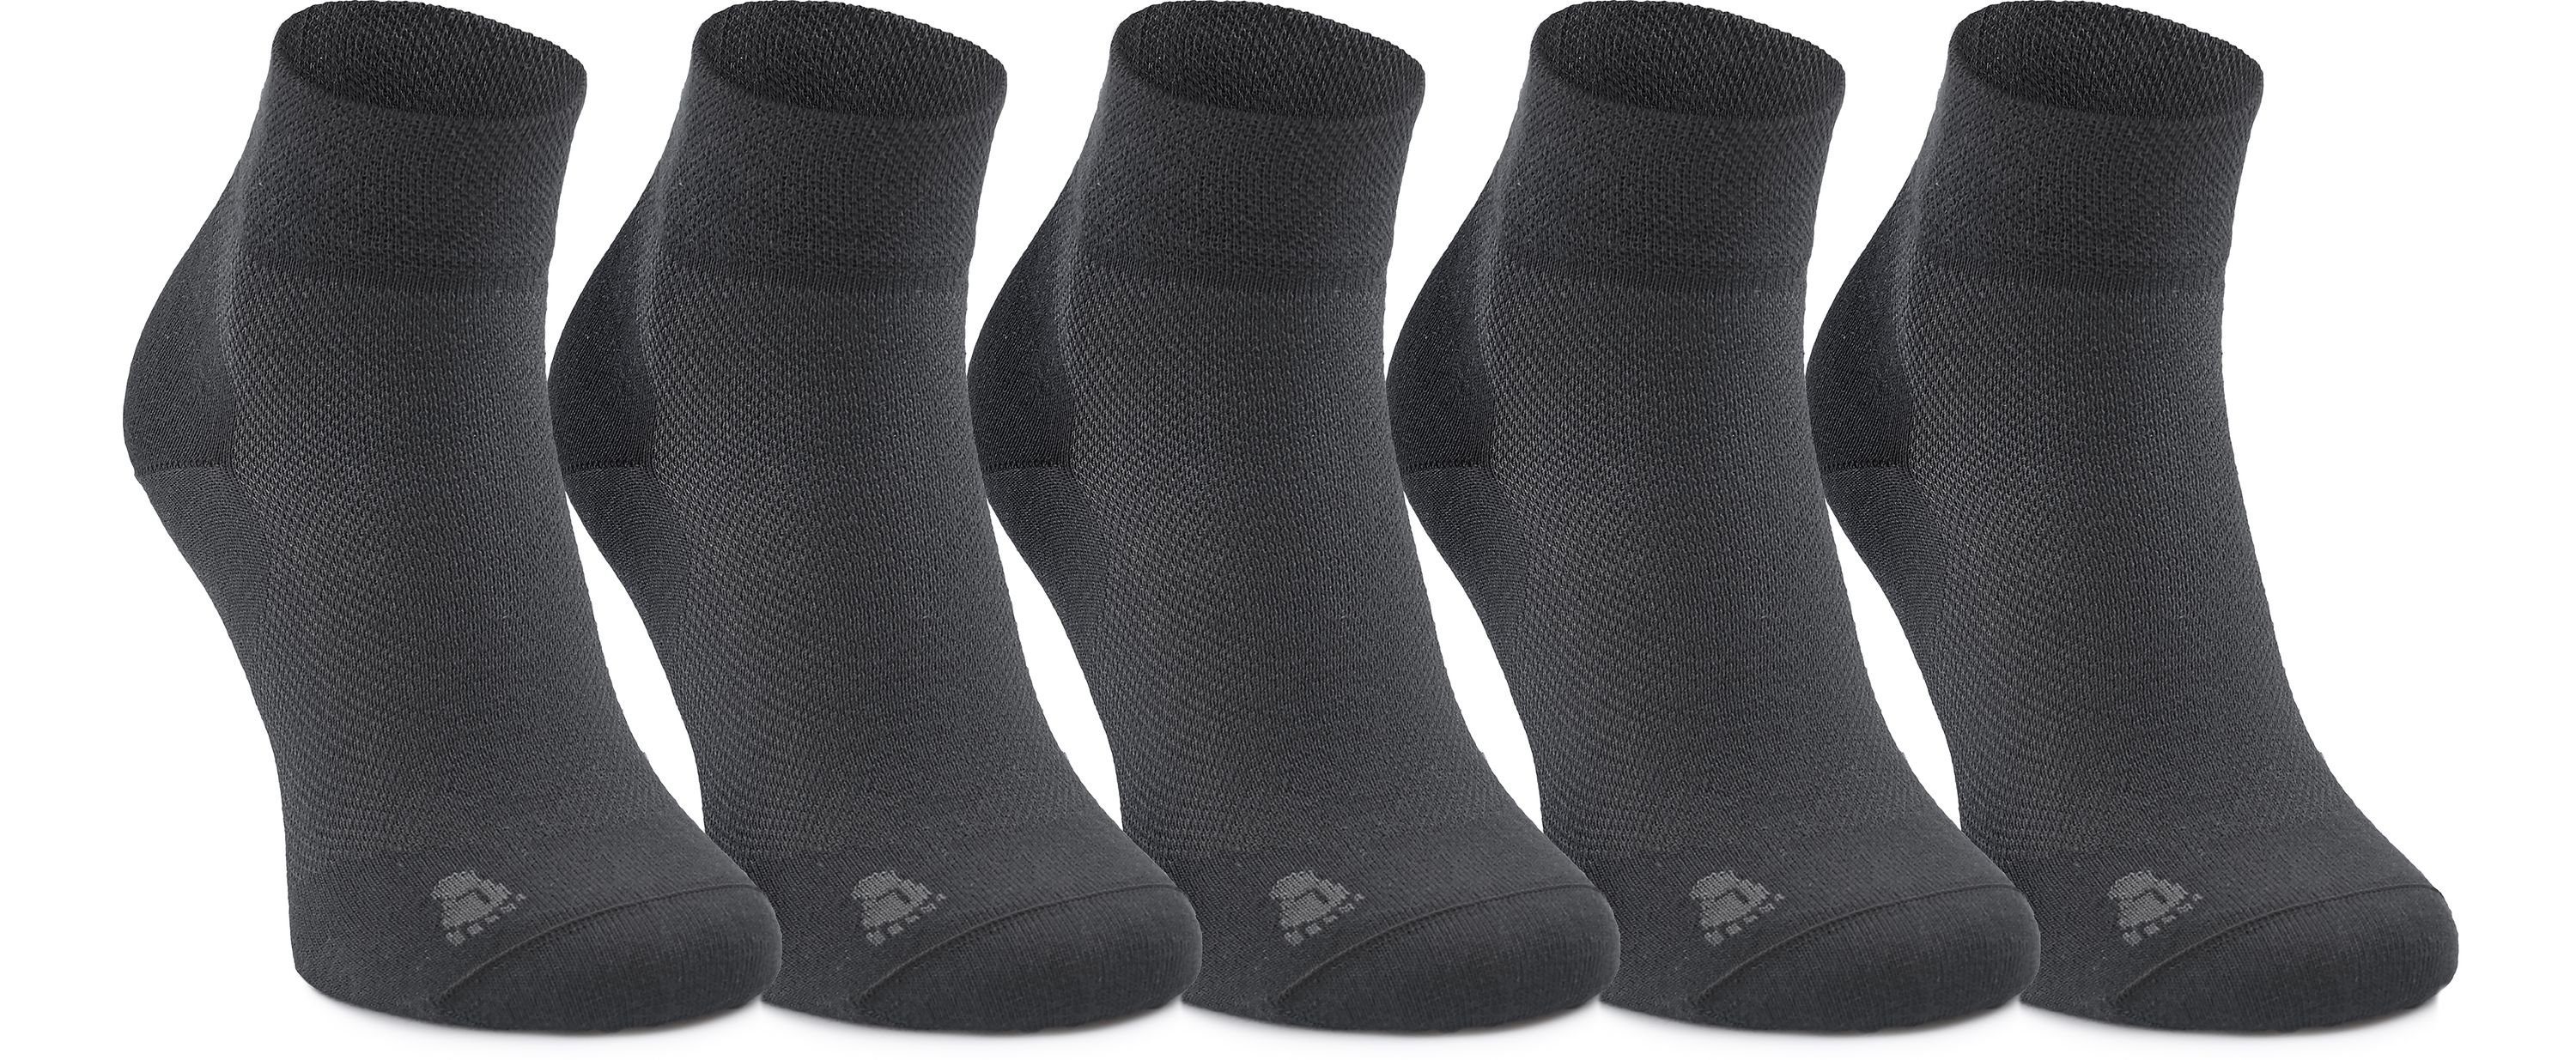 Ladeheid Socken Unisex 5 Pack Baumwolle Graphite LASS0002 Socken aus